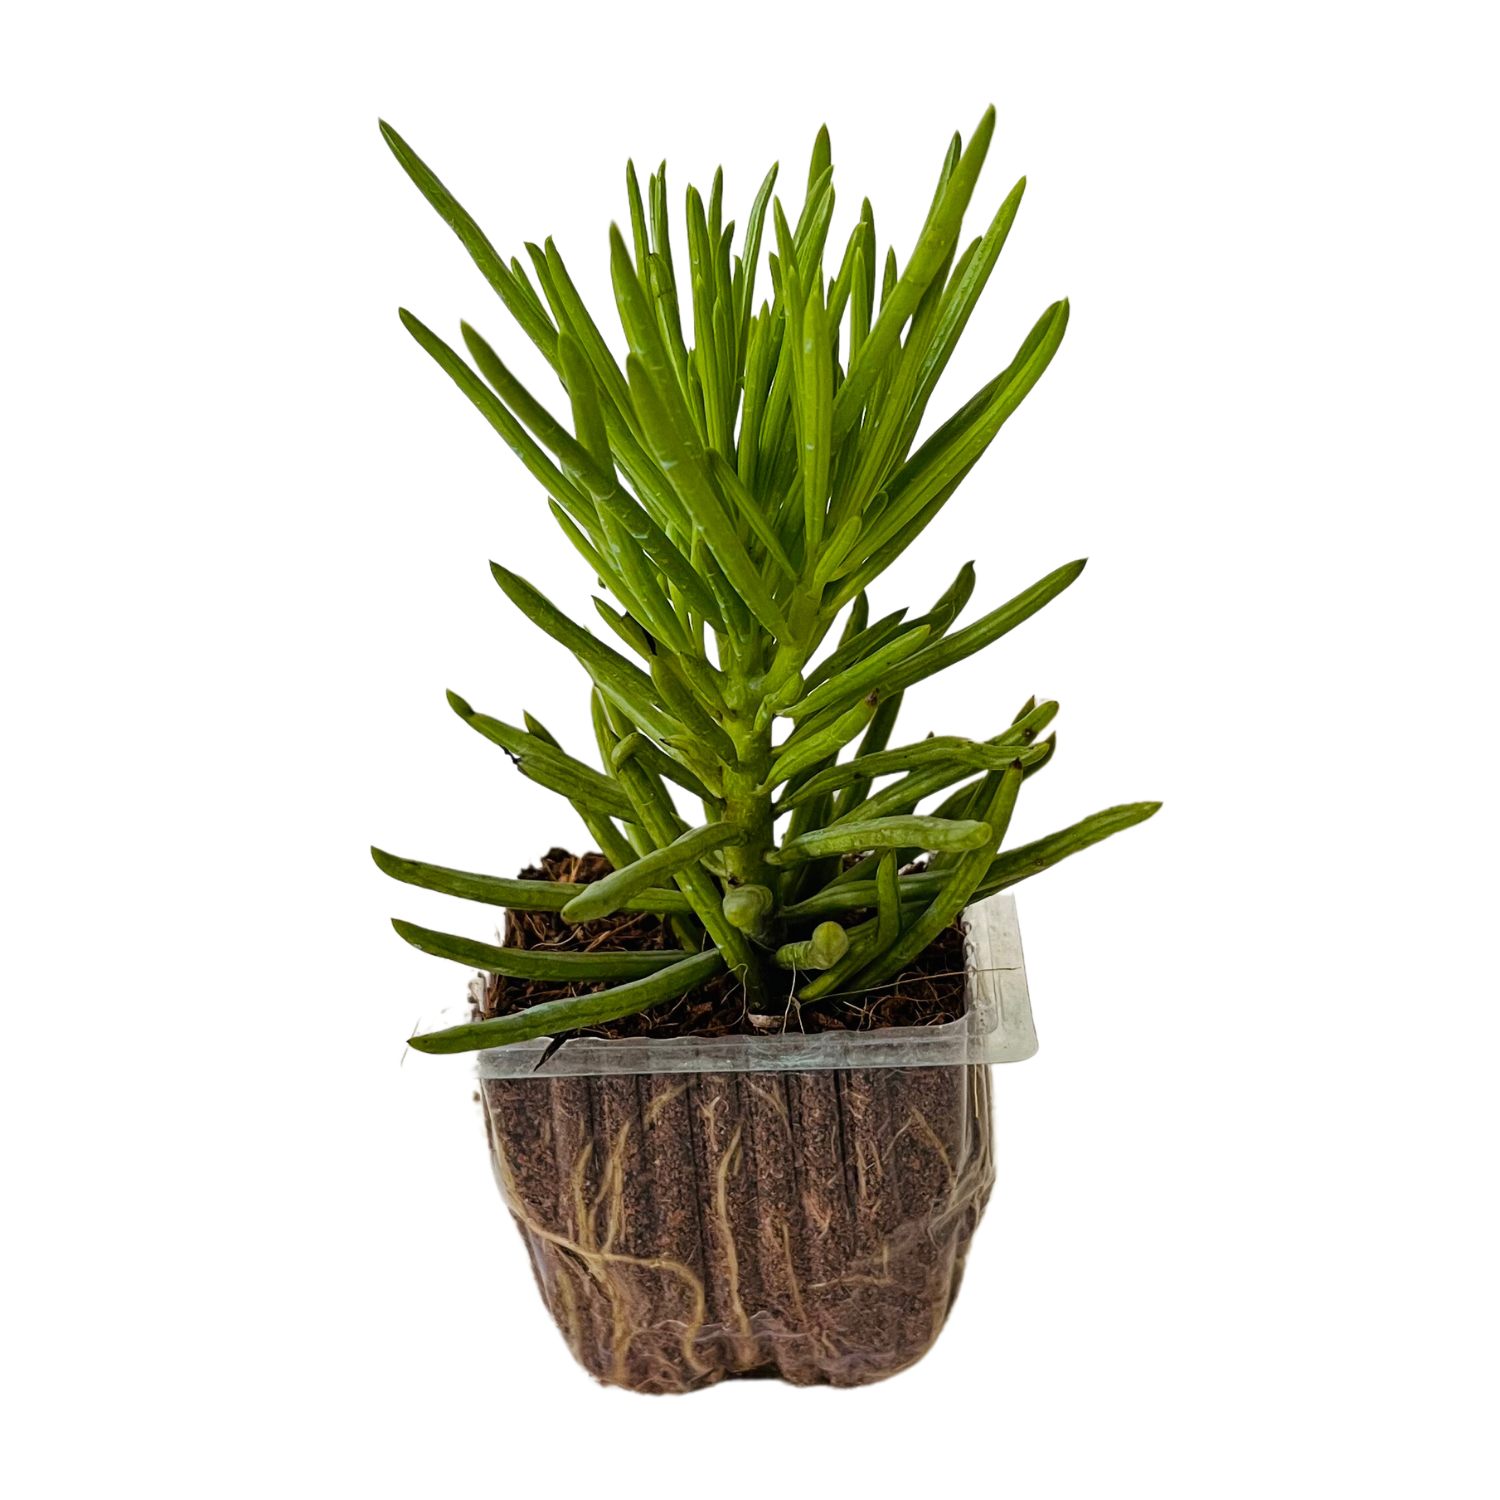 Senecio Barbertonicus Plant Succulent Live Plant